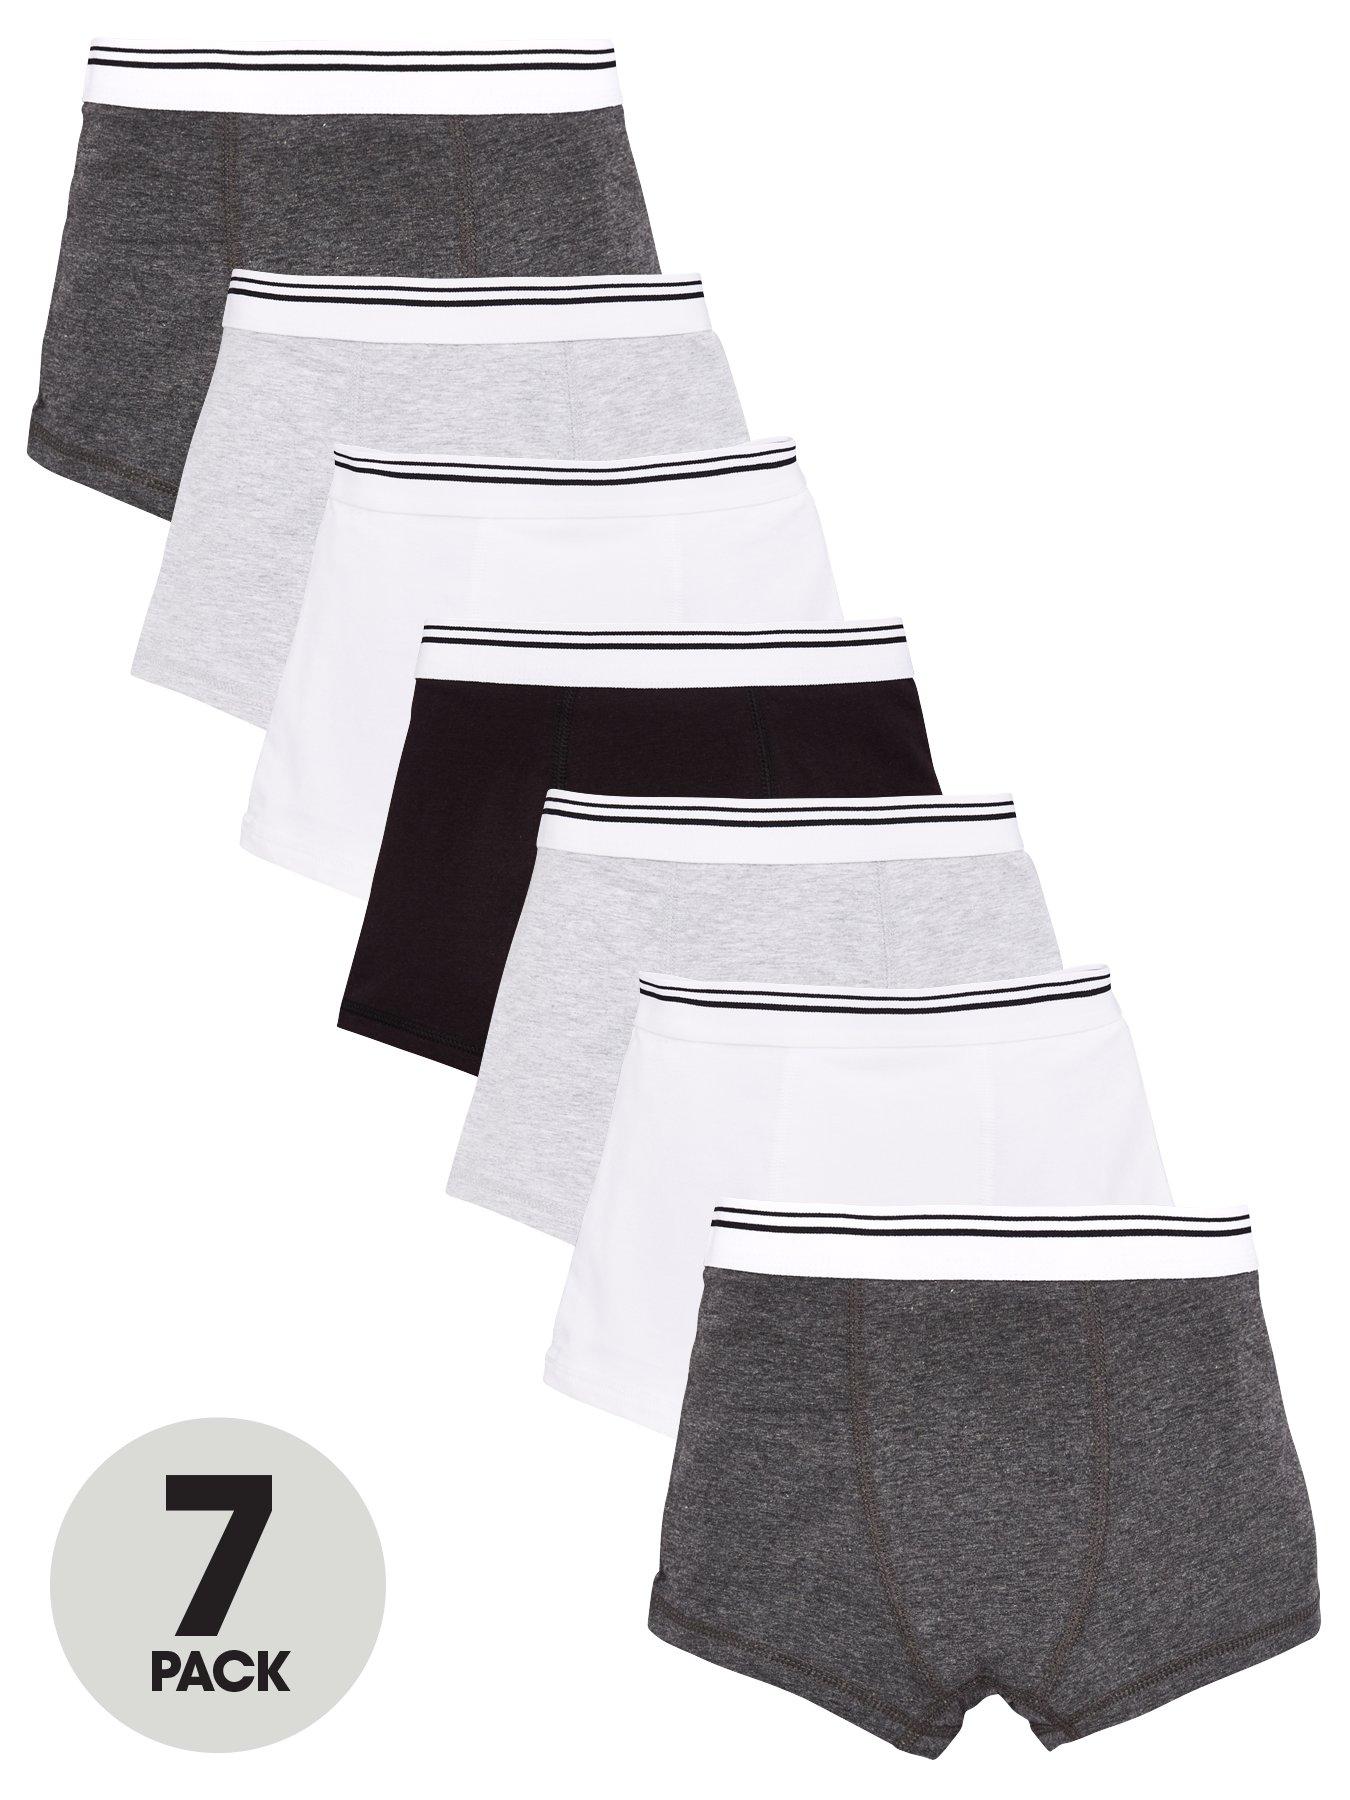 BODYCARE Boys Brief Multi-Color 3-12 Years Underwear Daily Use Regular FIT  comf